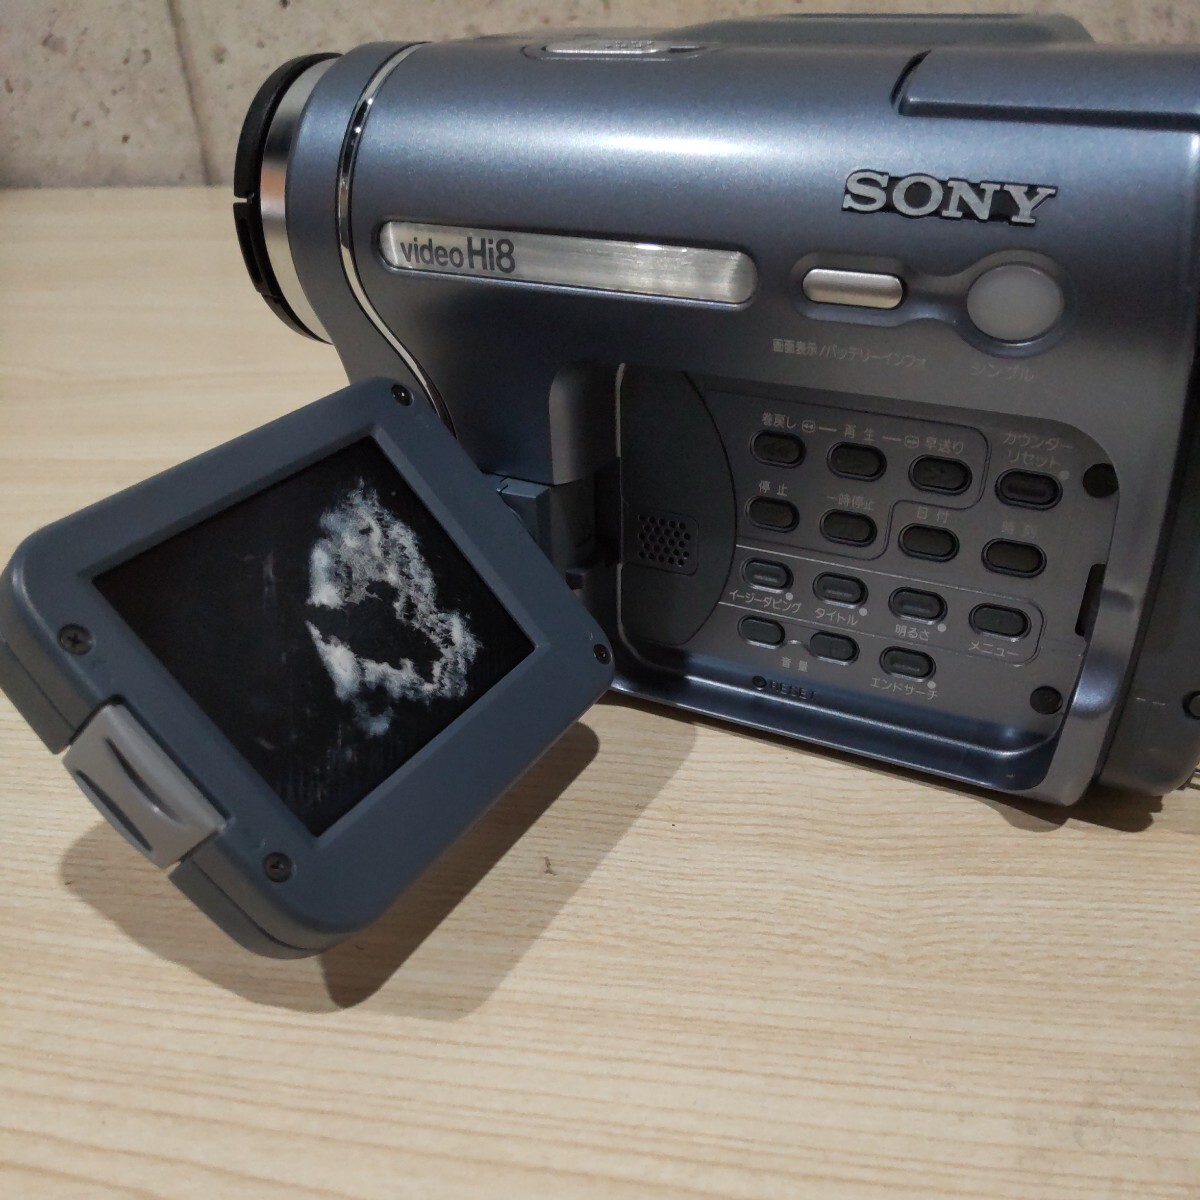 SNR240517 SONY video Hi8 Handycam CCD-TRV116 2004 year made video camera recorder HANDYCAM Sony digital video camera present condition goods 